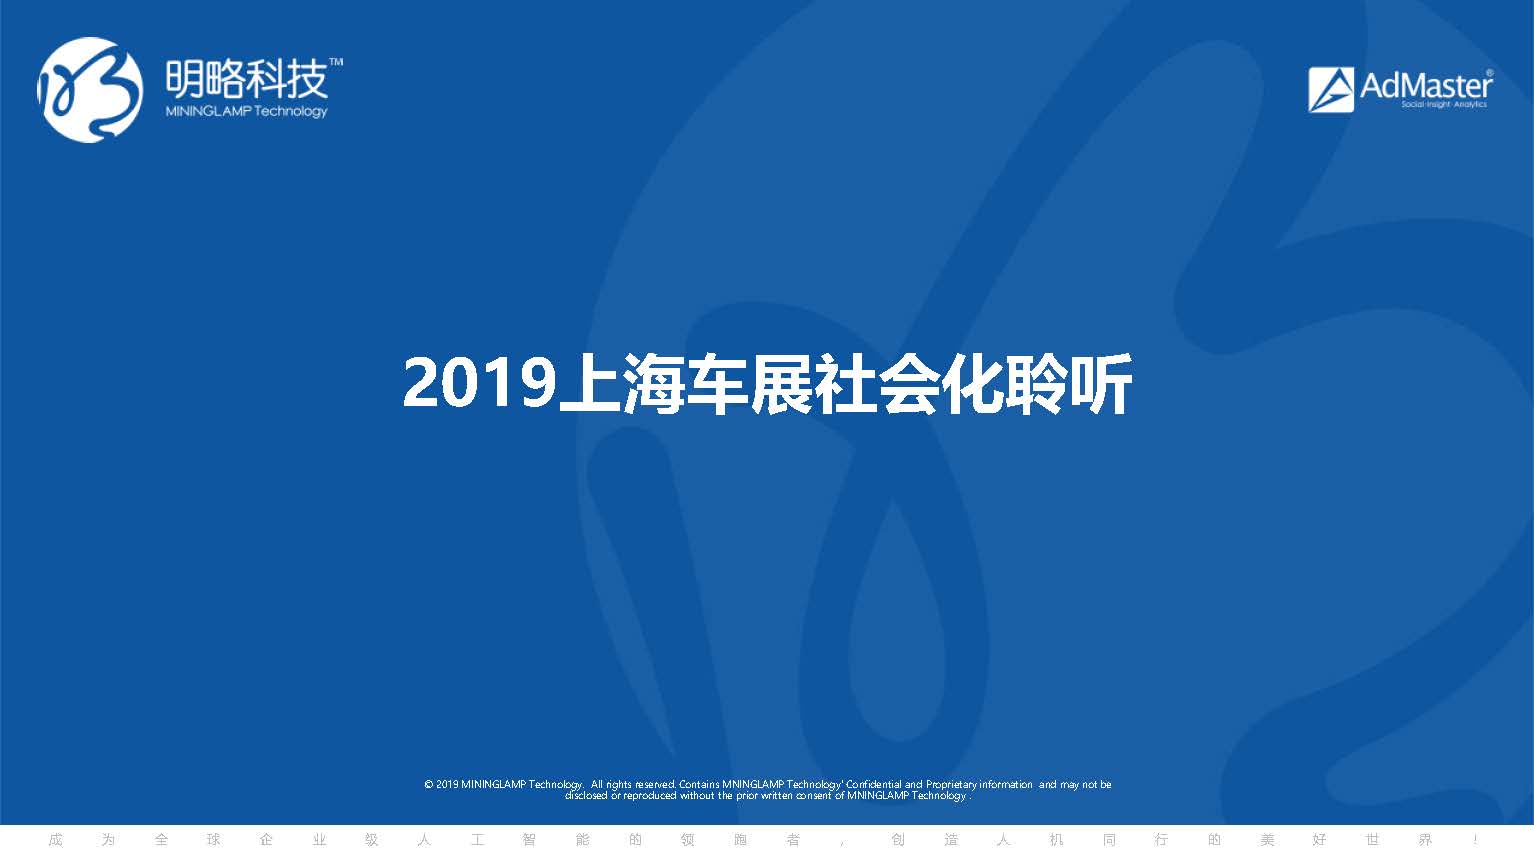 AdMaster：2019上海车展社会化聆听报告(附下载地址)